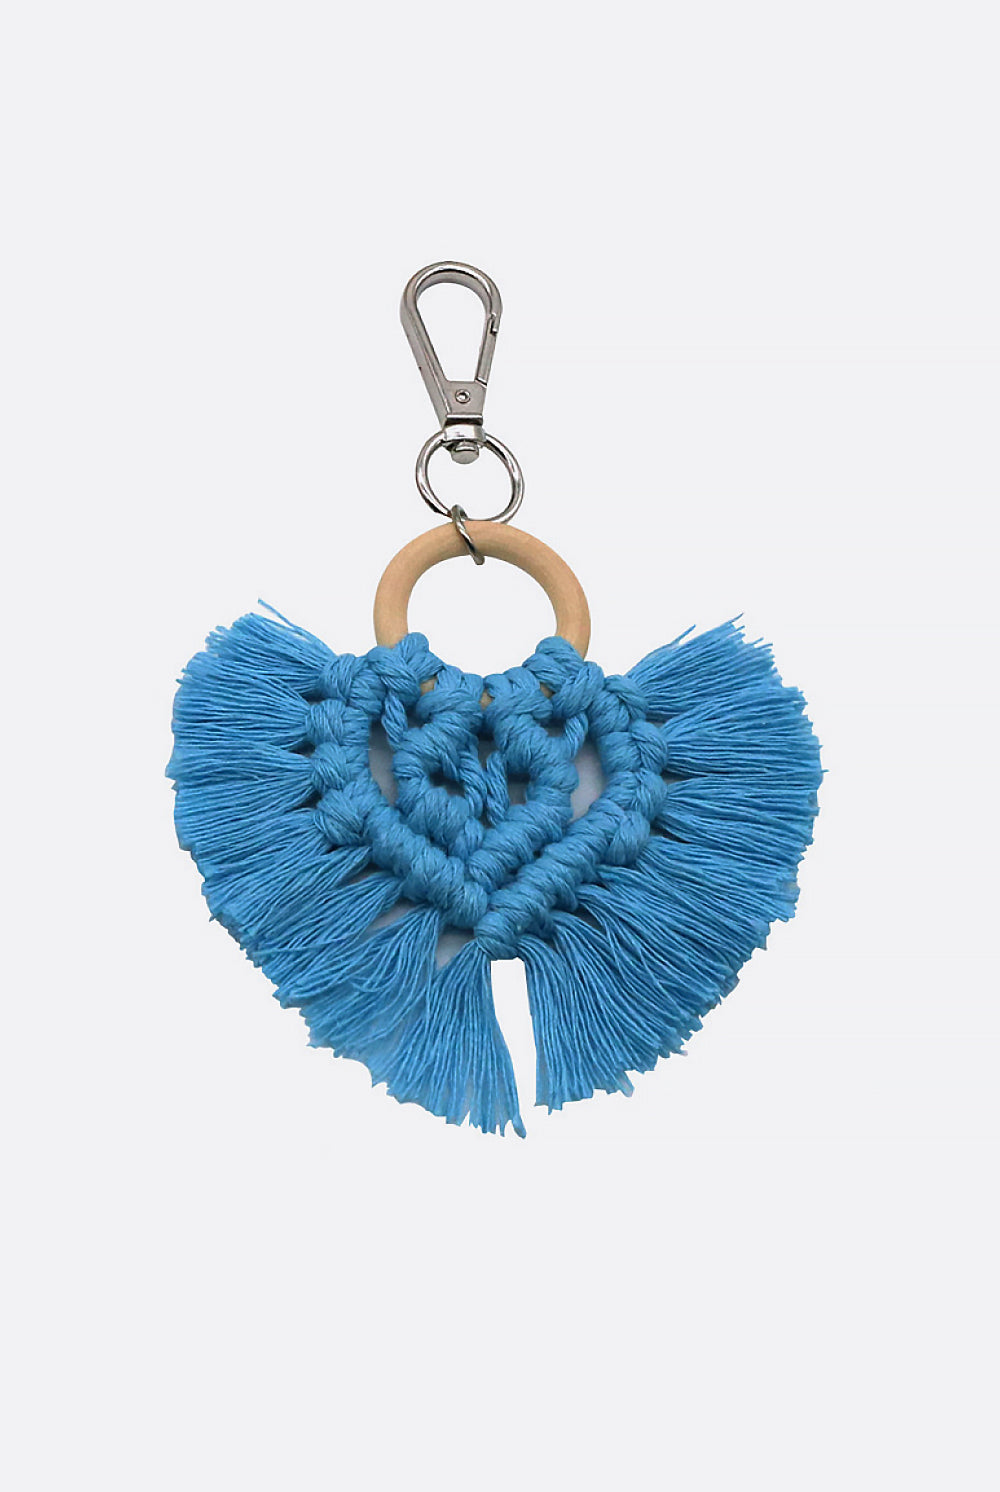 Steel Blue Assorted 4-Pack Heart-Shaped Macrame Fringe Keychain Key Chains